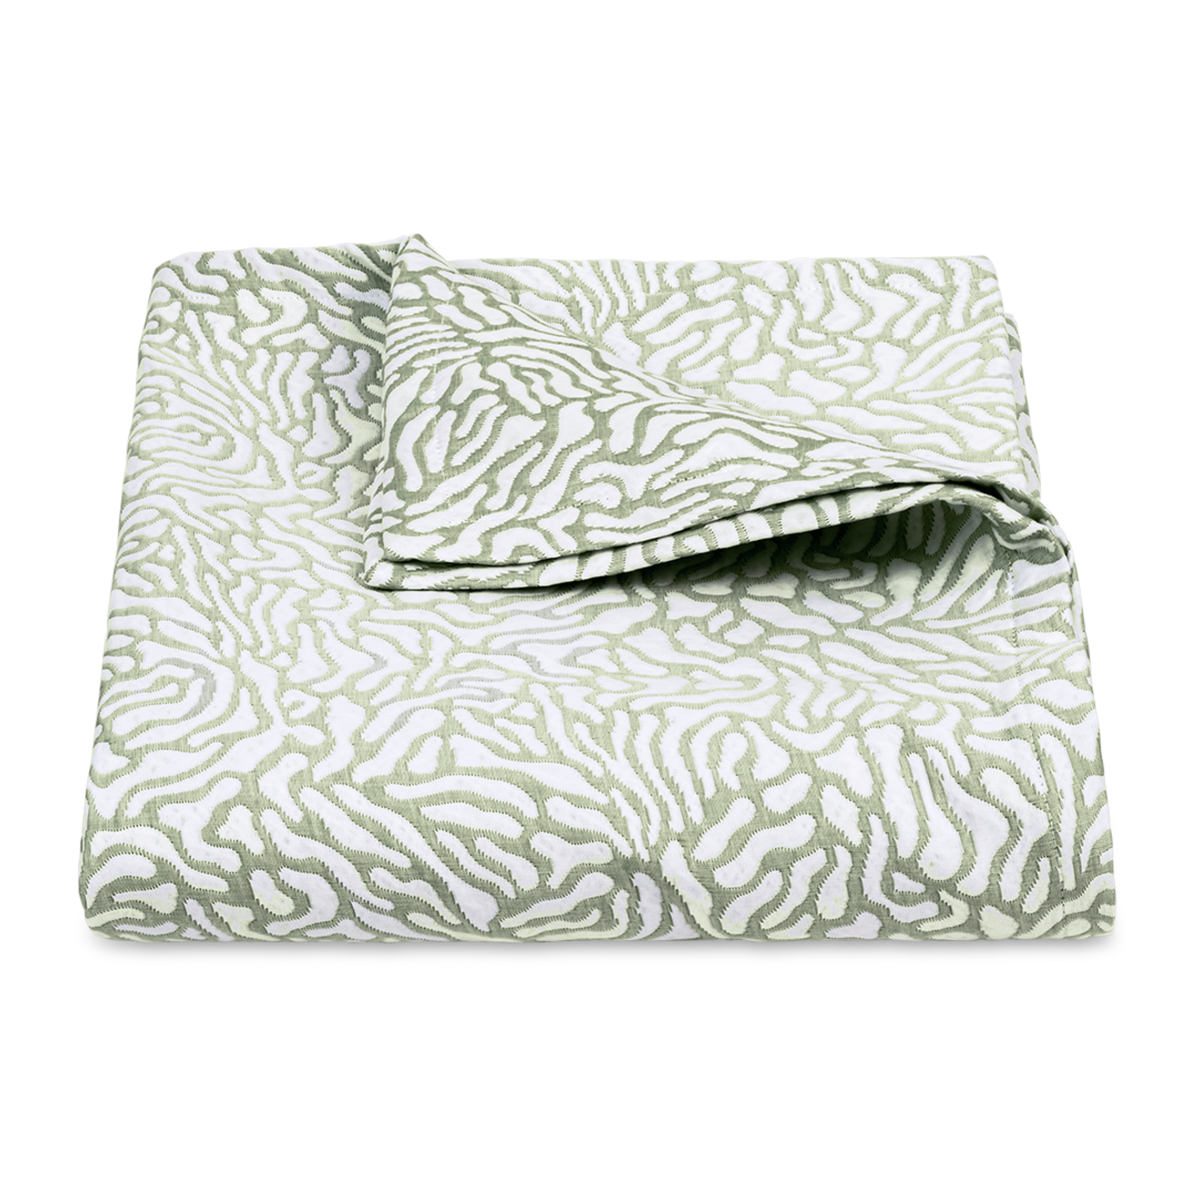 Folded Duvet Cover of Matouk Schumacher Cora Bedding in Grass Color